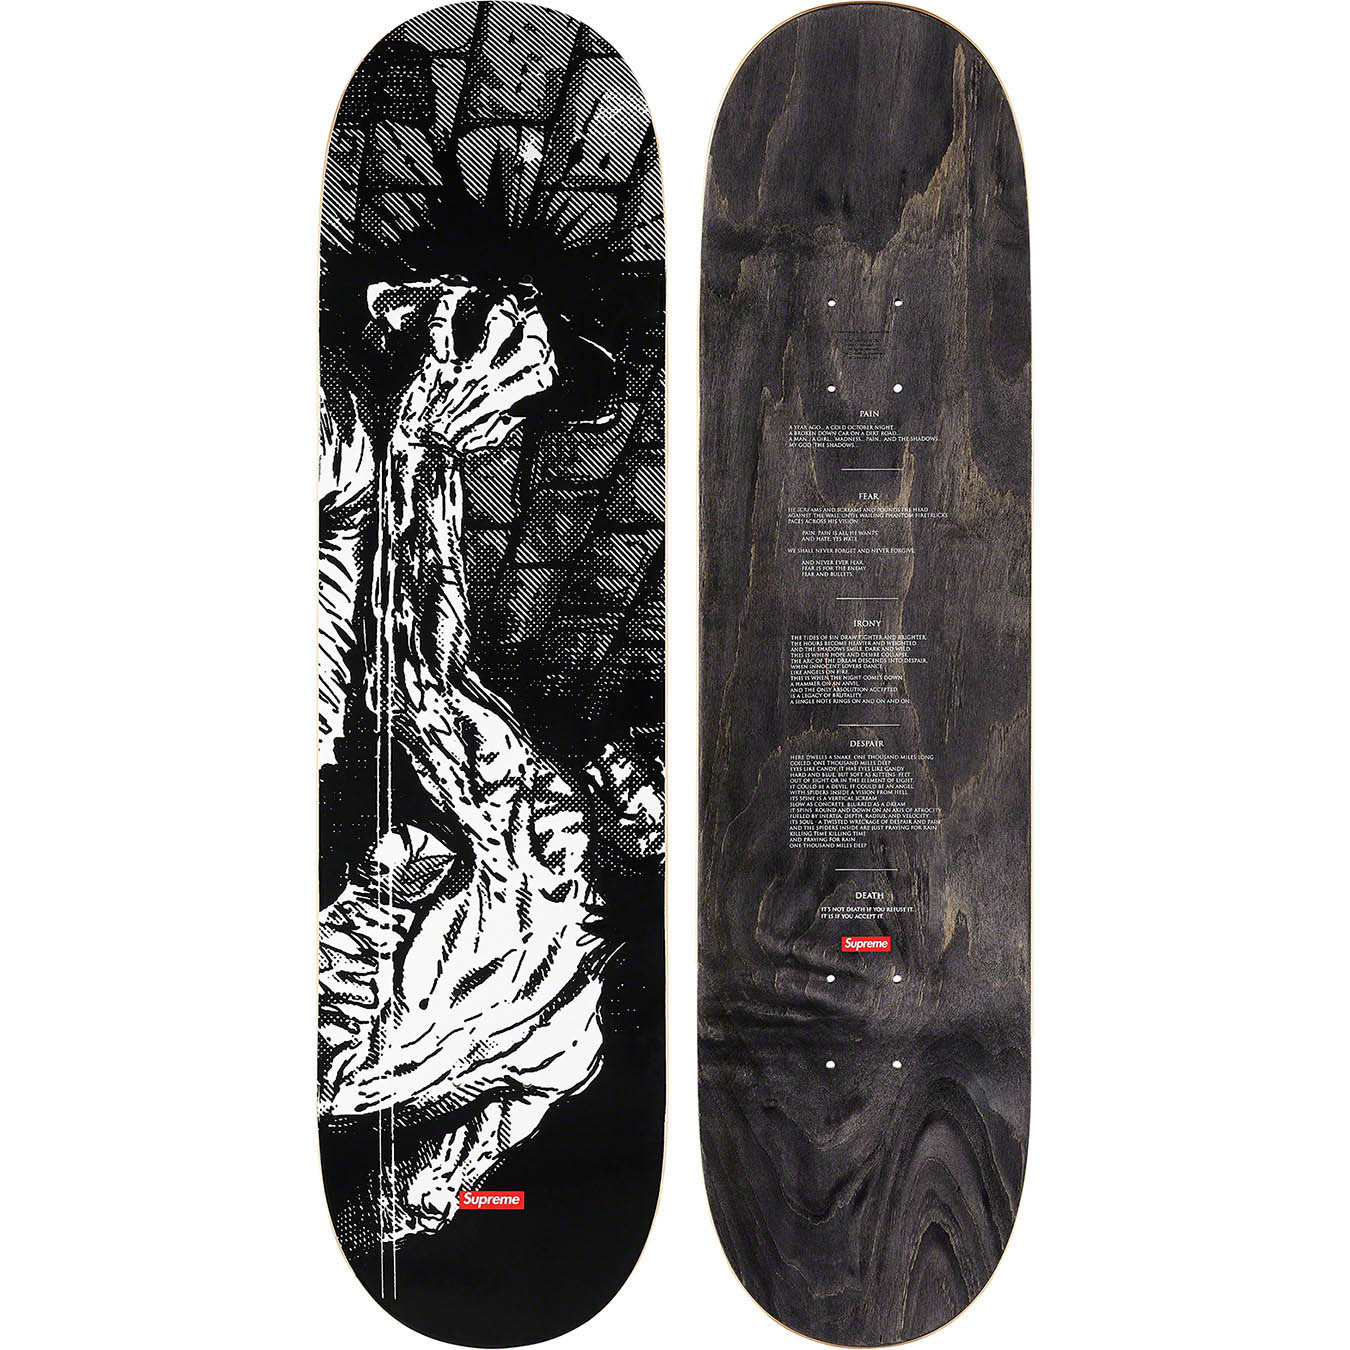 Supreme/The Crow Skateboard